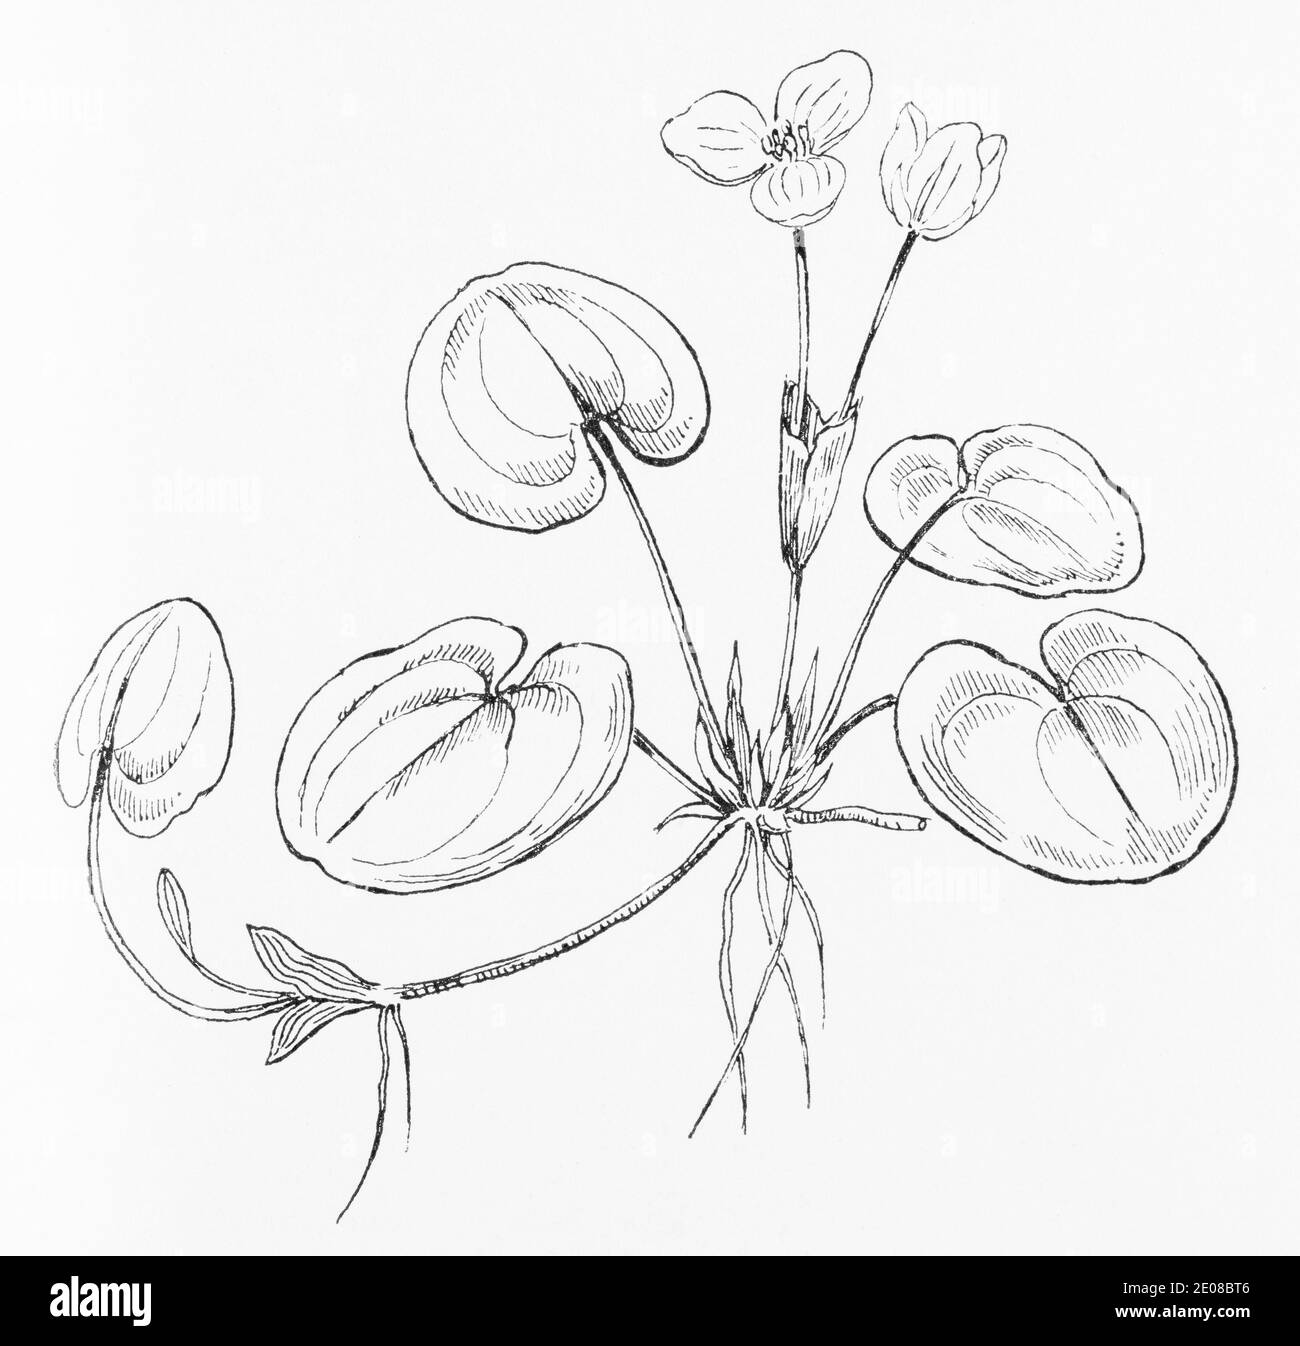 Old botanical illustration engraving of Frogbit / Hydrocharis morsus-ranae. See Notes Stock Photo